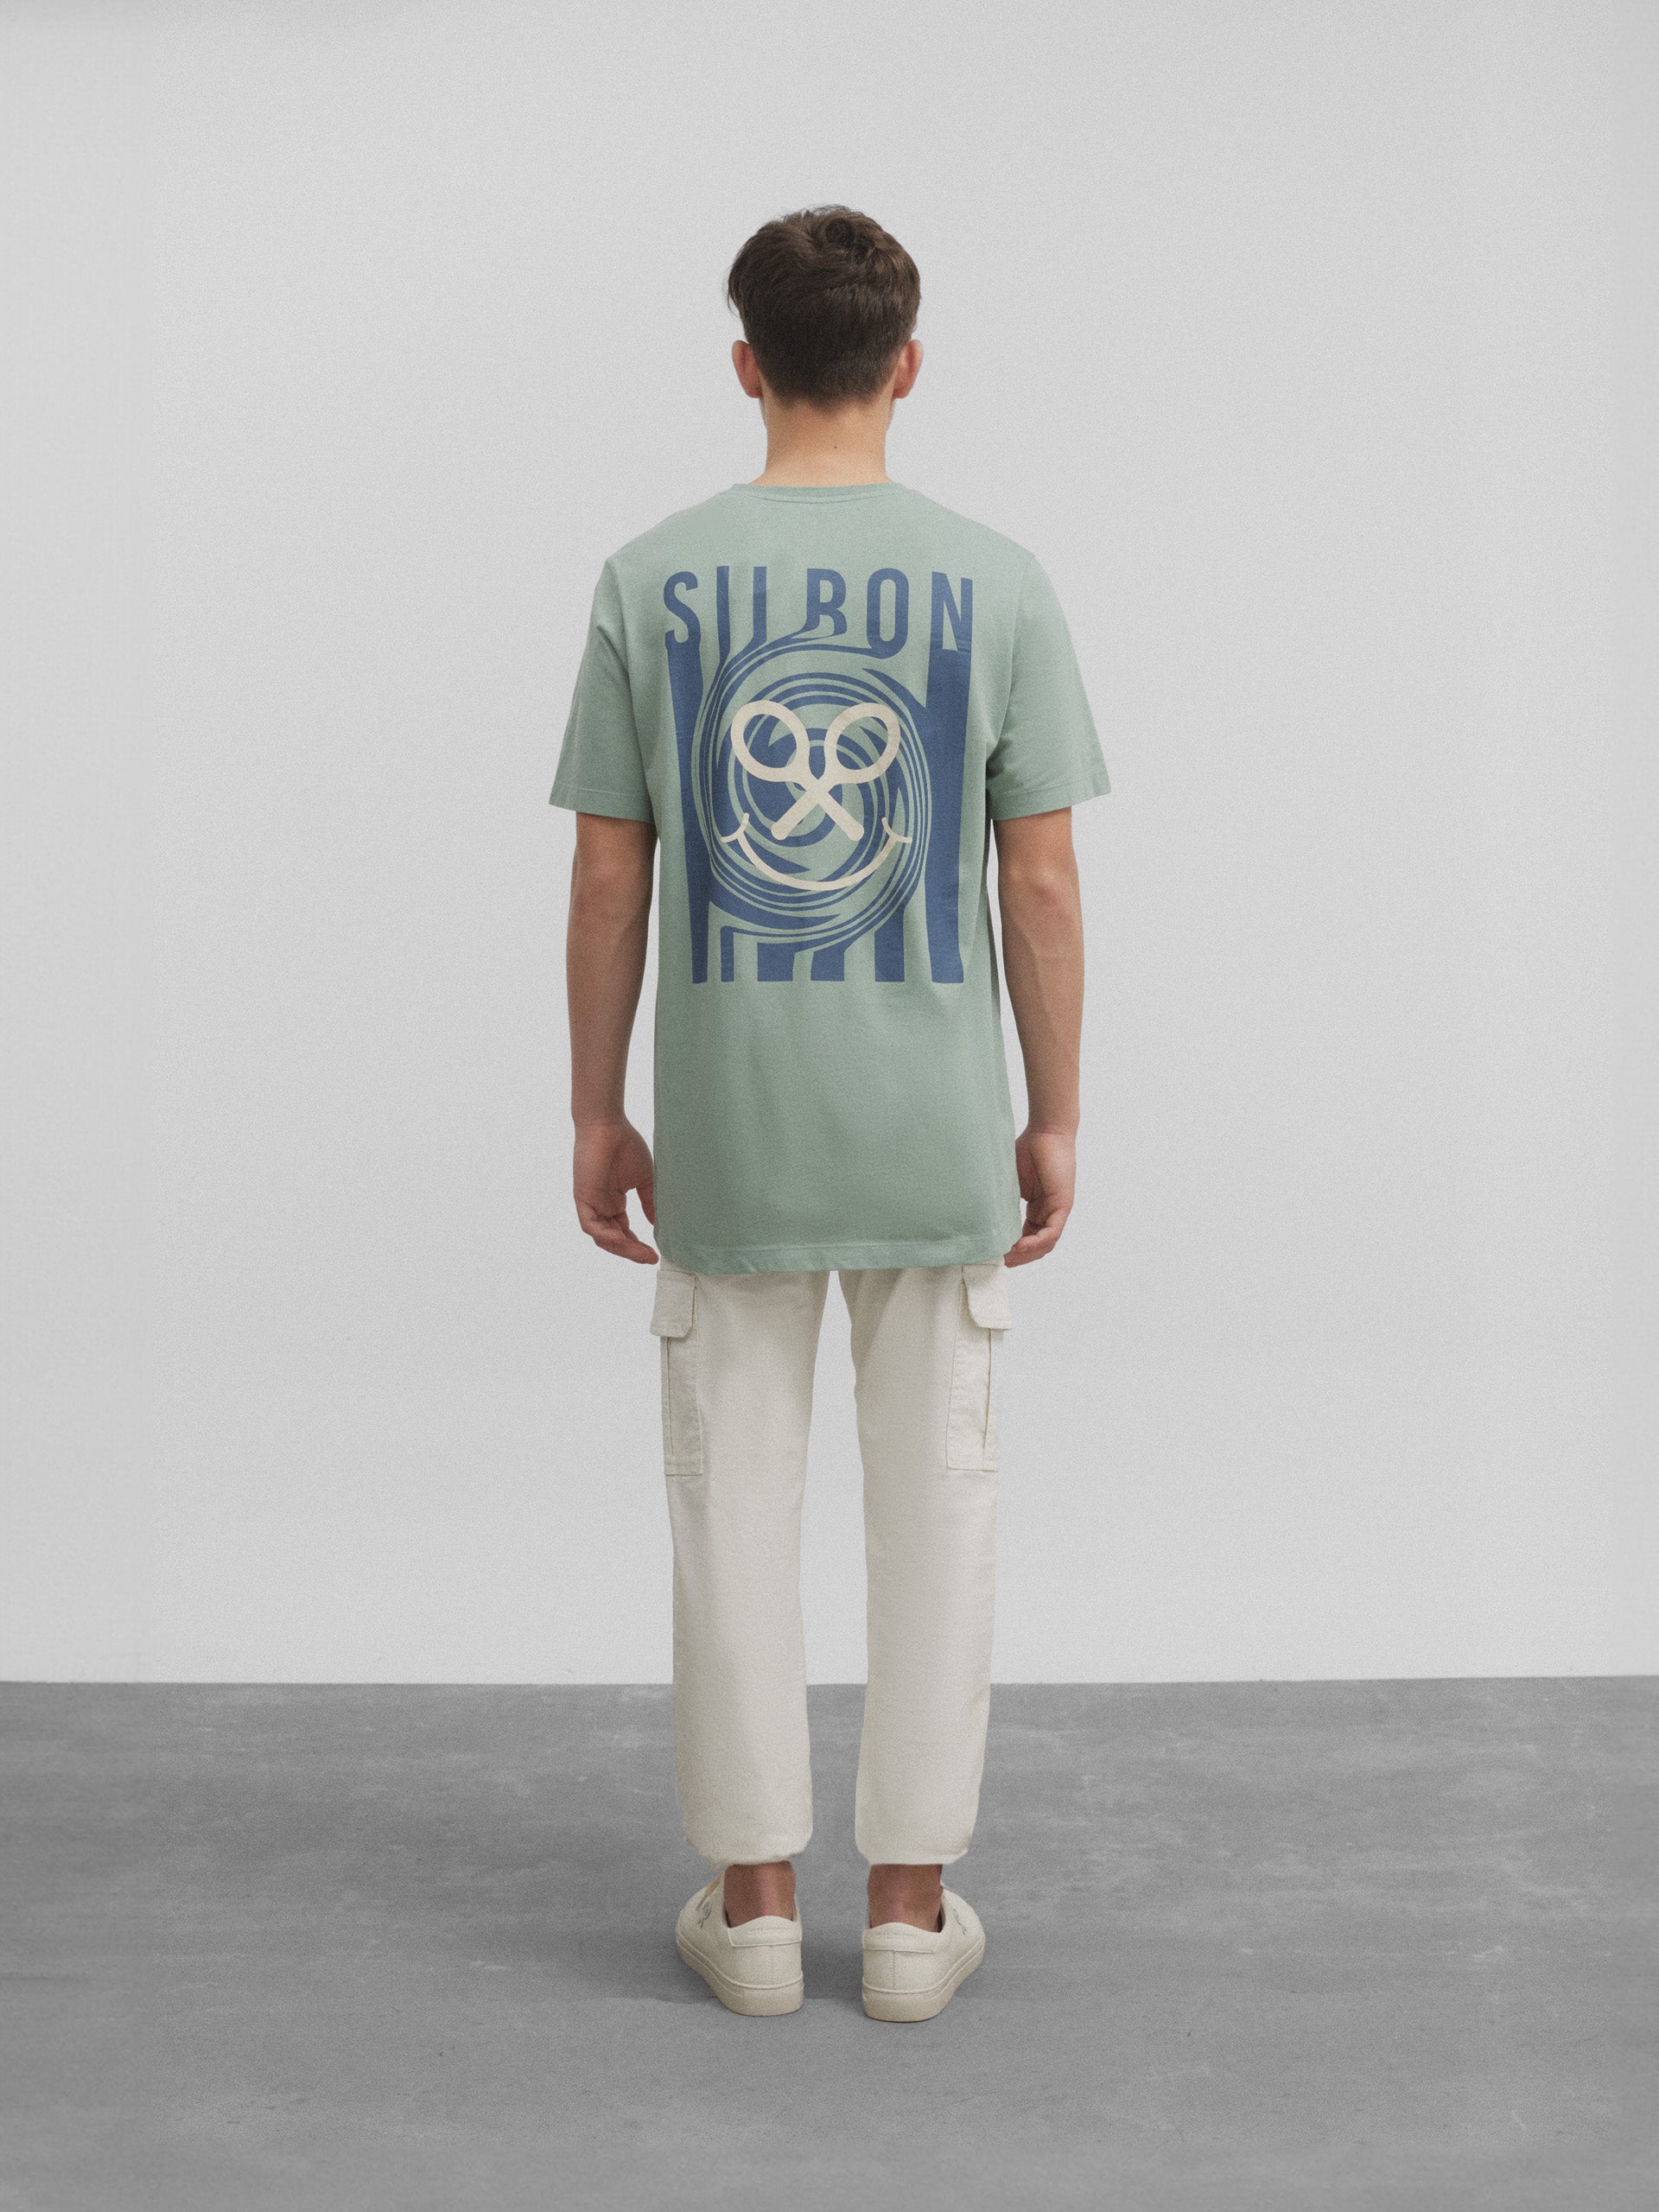 Silbon striped acid green t-shirt